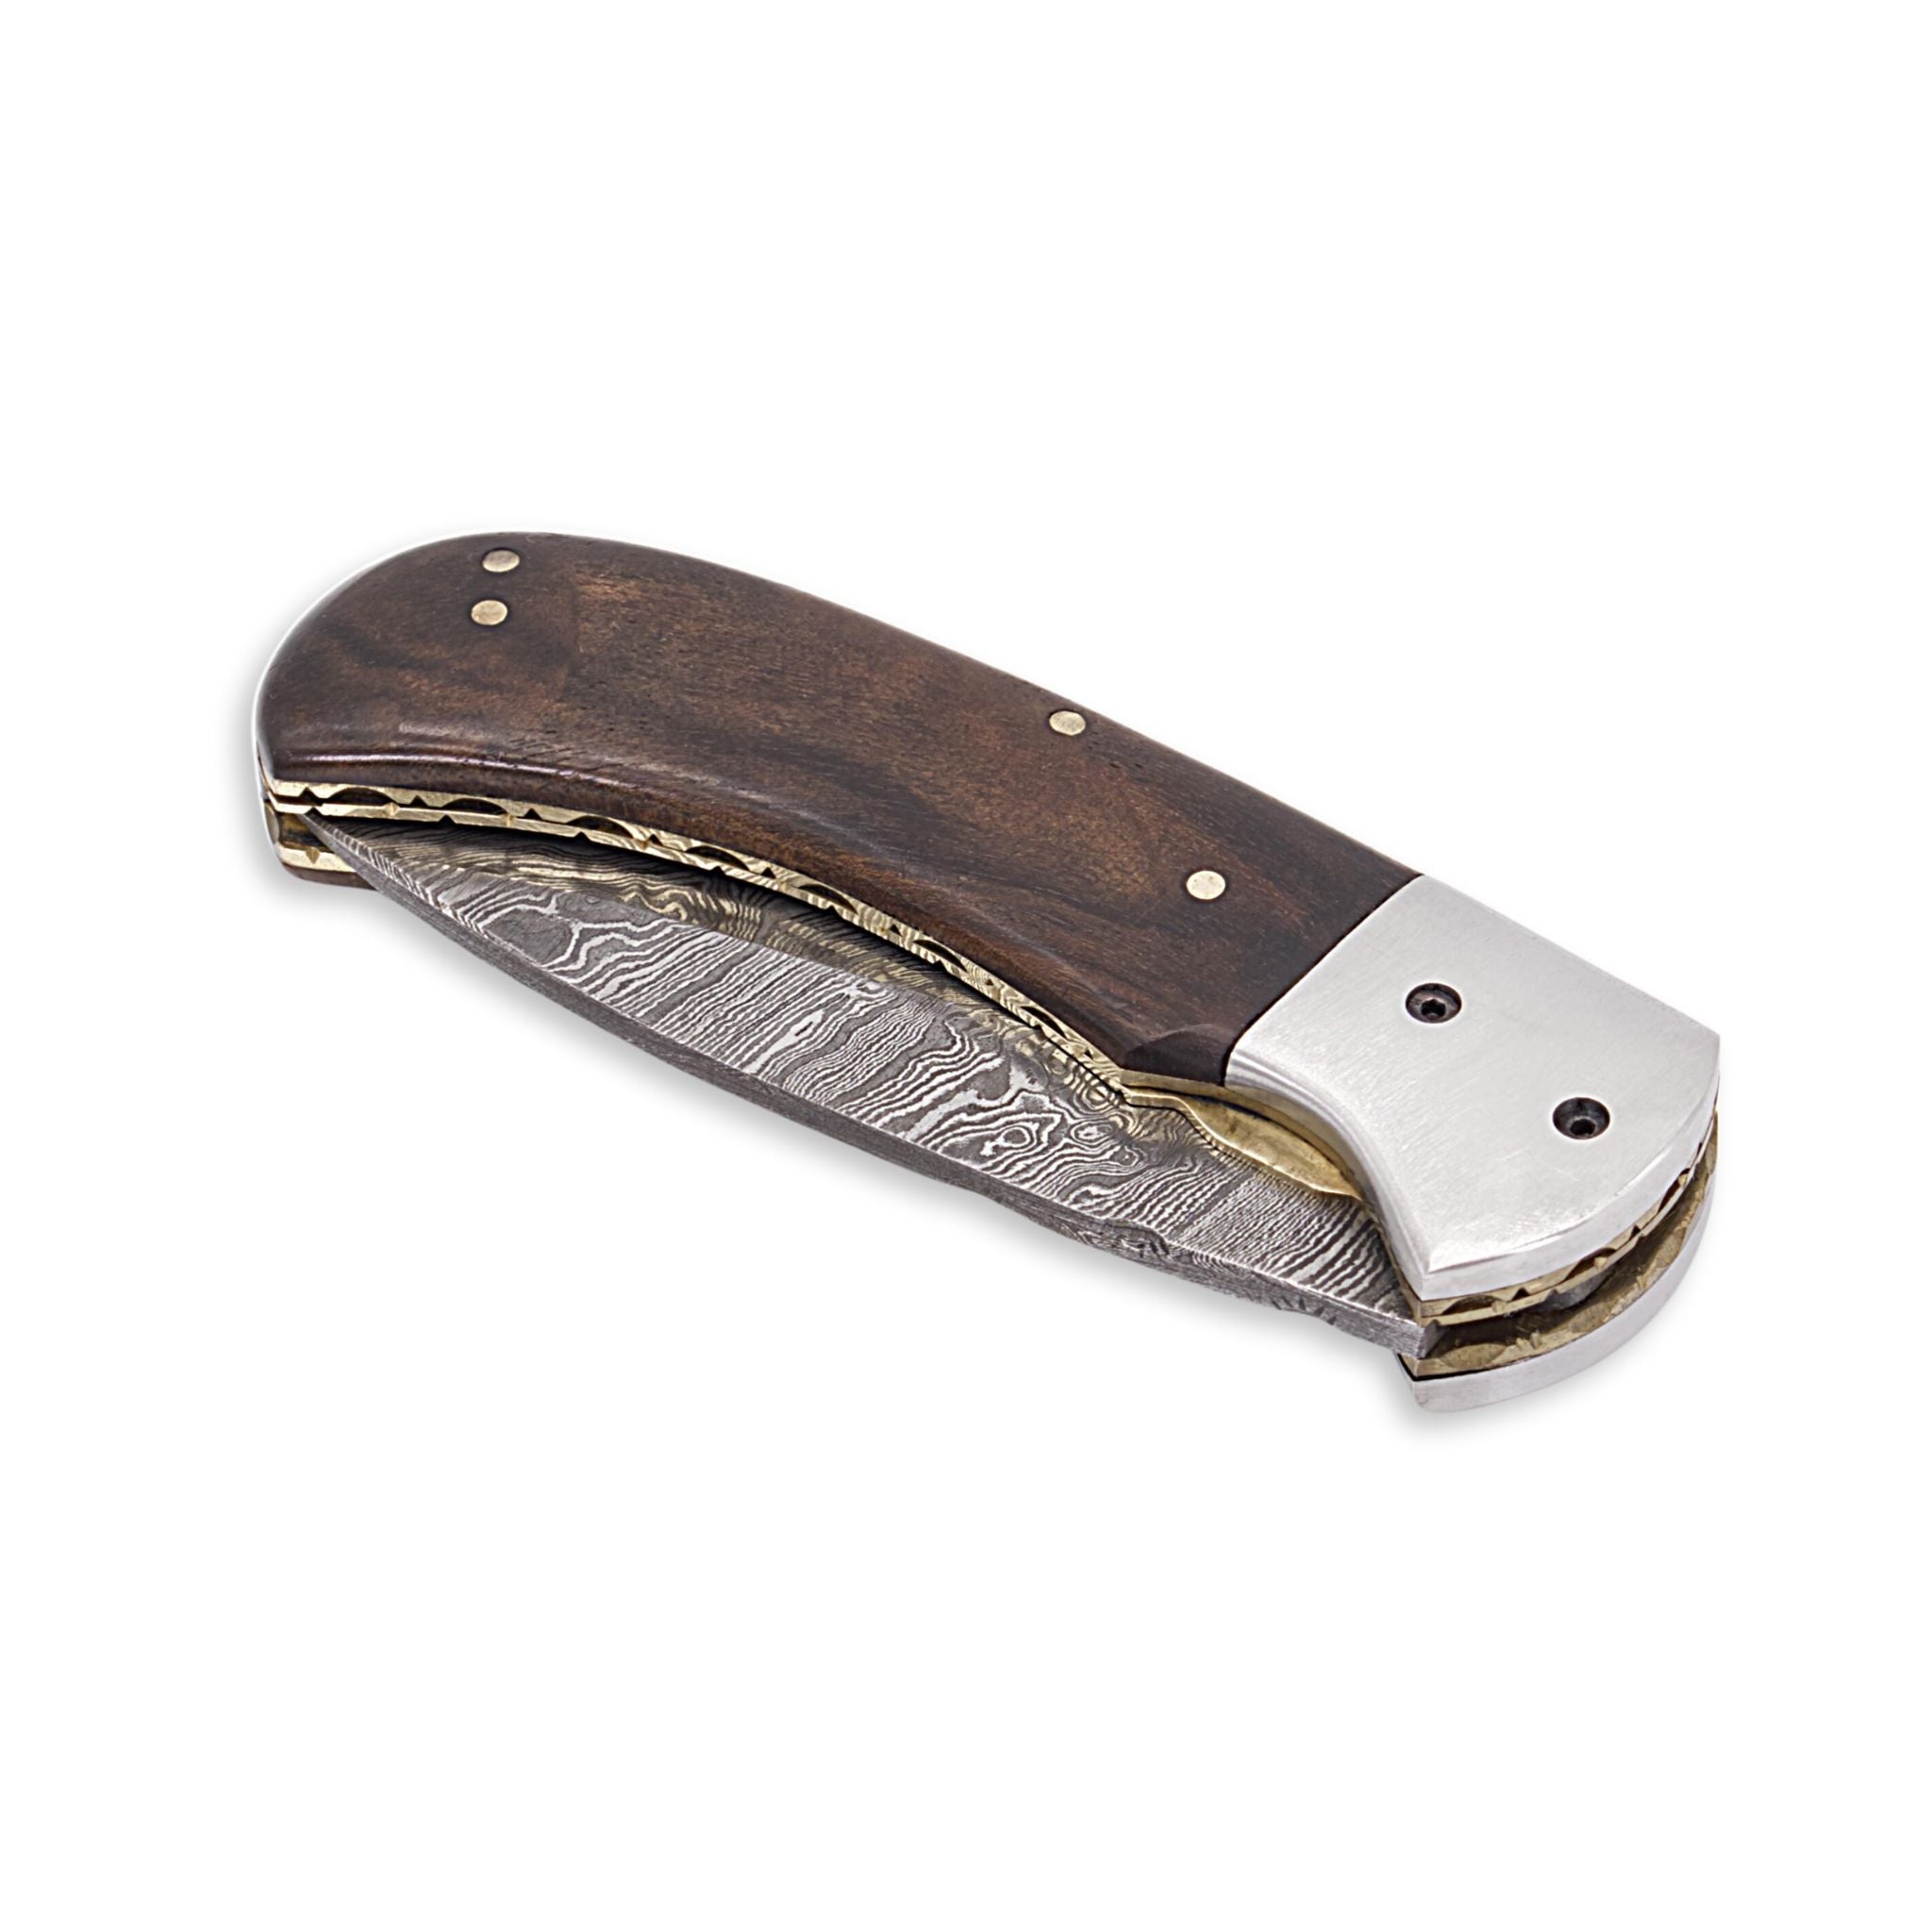 Trusty Fold I, Handmade Folding Knife, Pocketknife